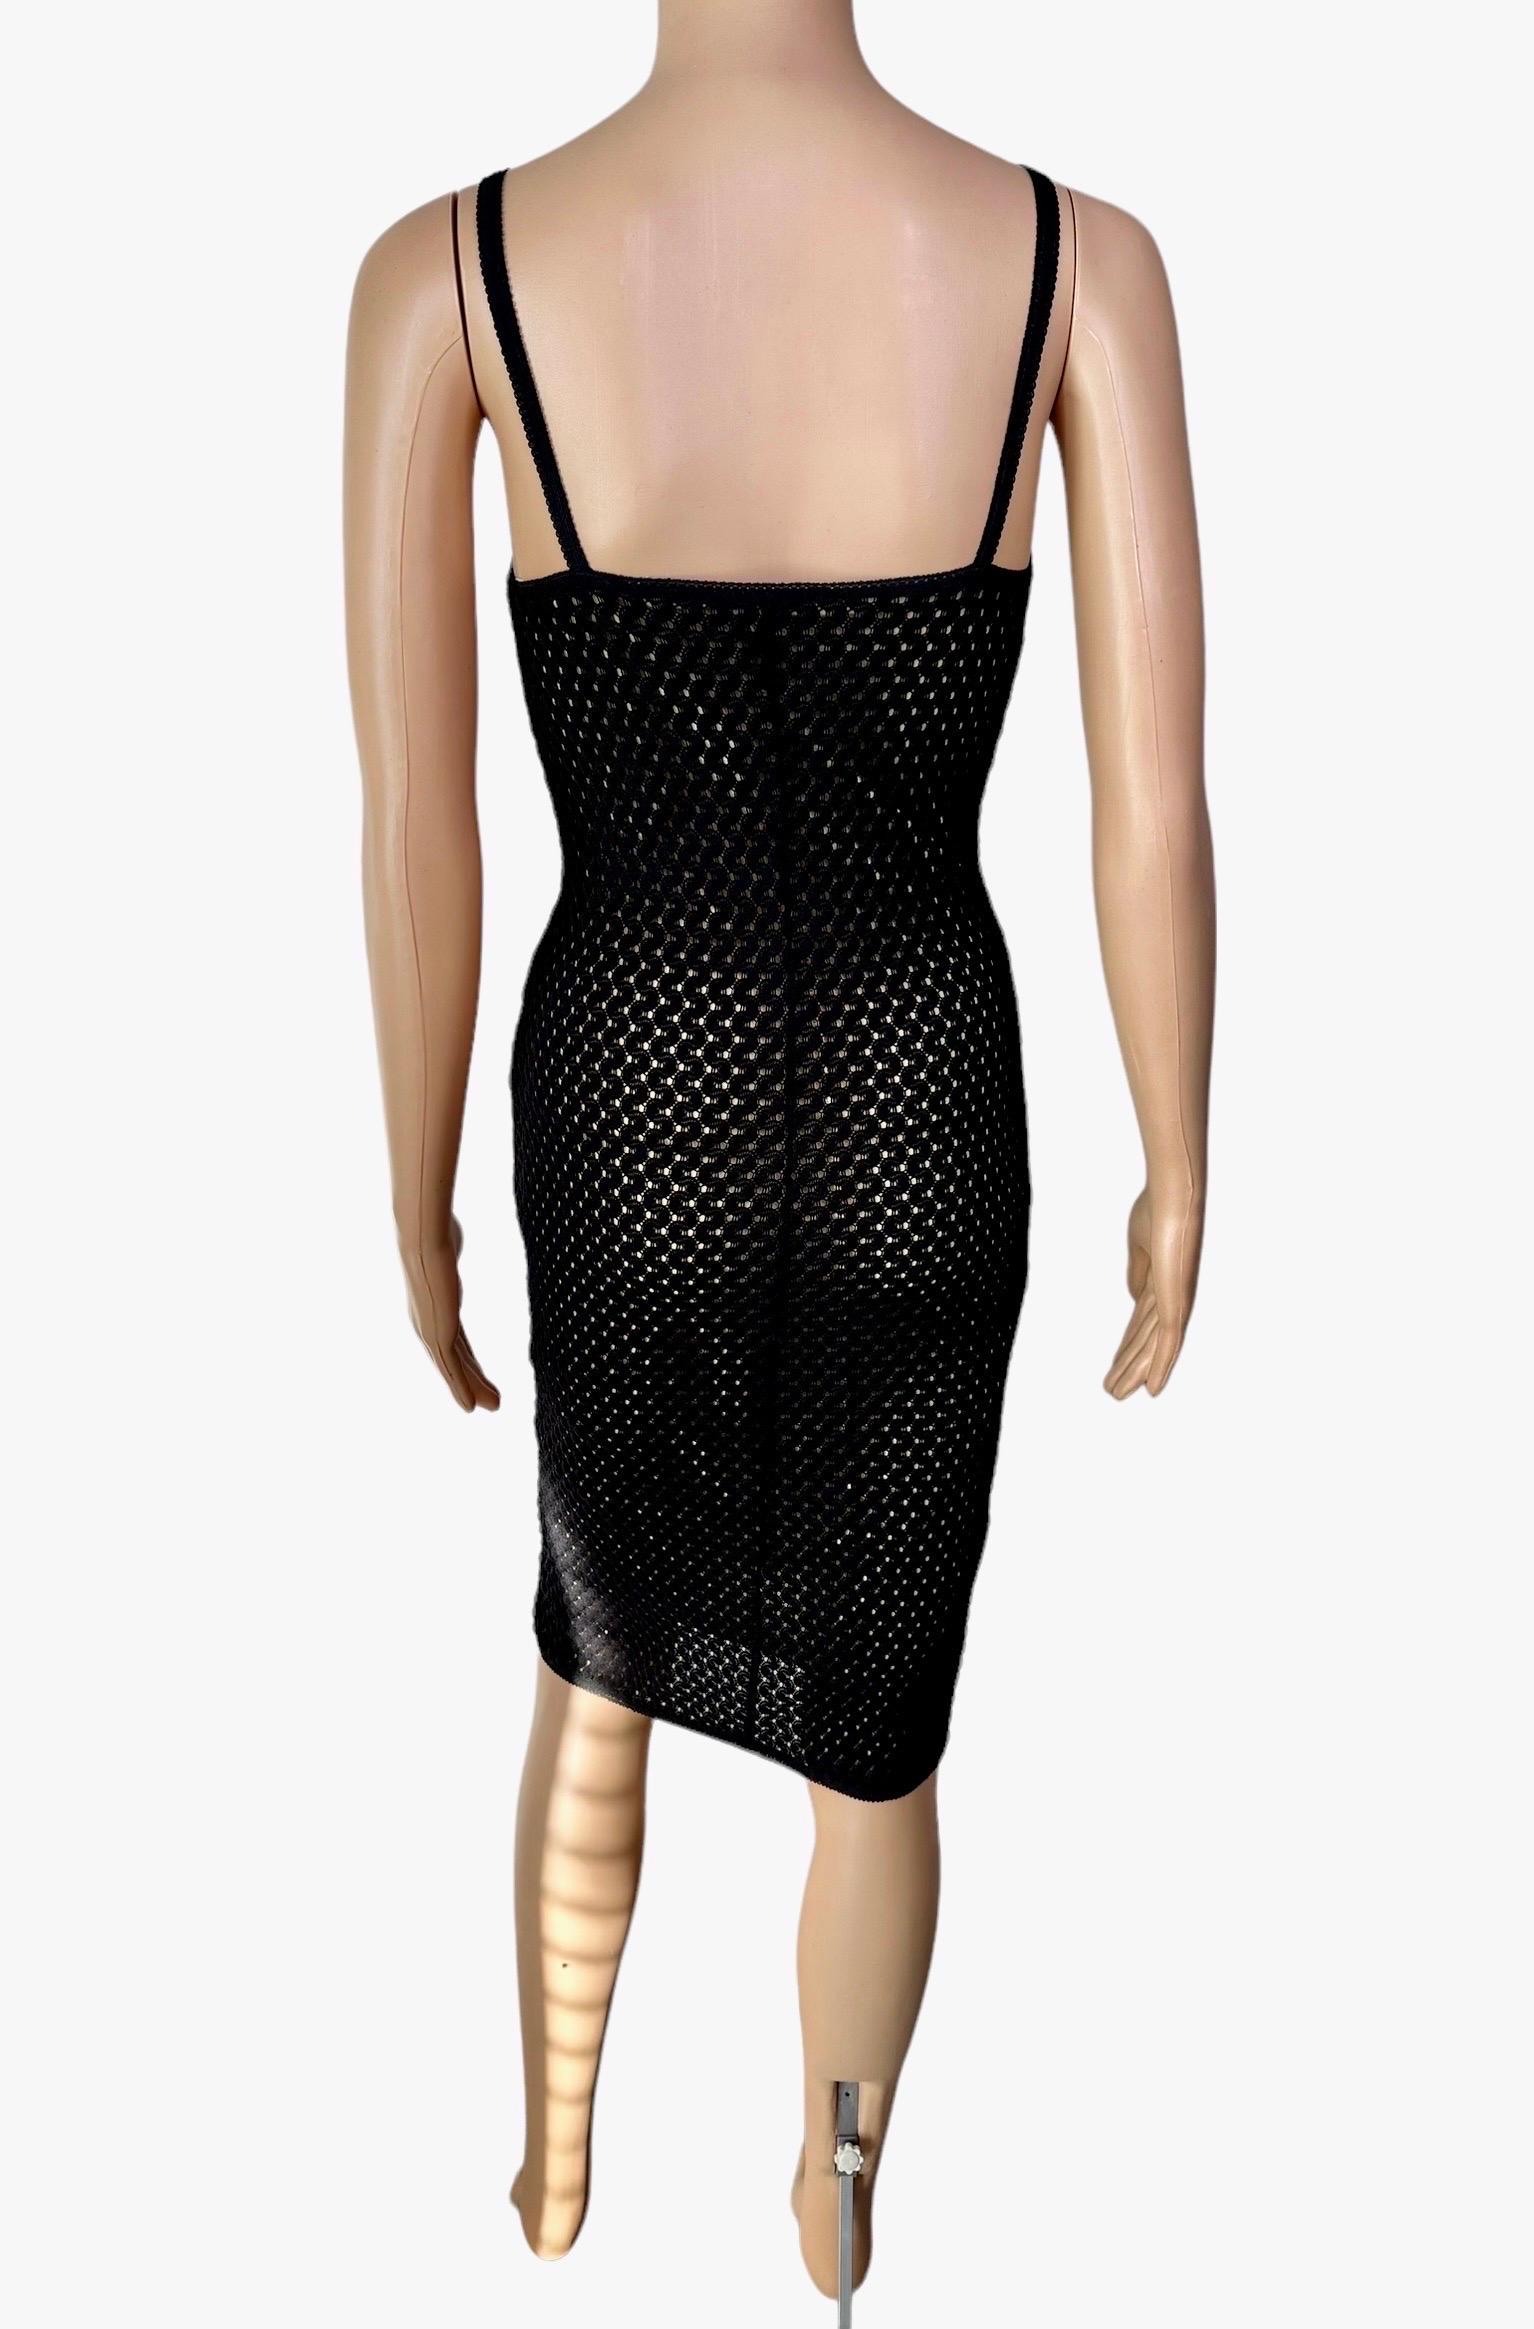 D&G by Dolce & Gabbana 1990's Sheer Knit Fishnet Virgin Mary Charm Black Dress 1